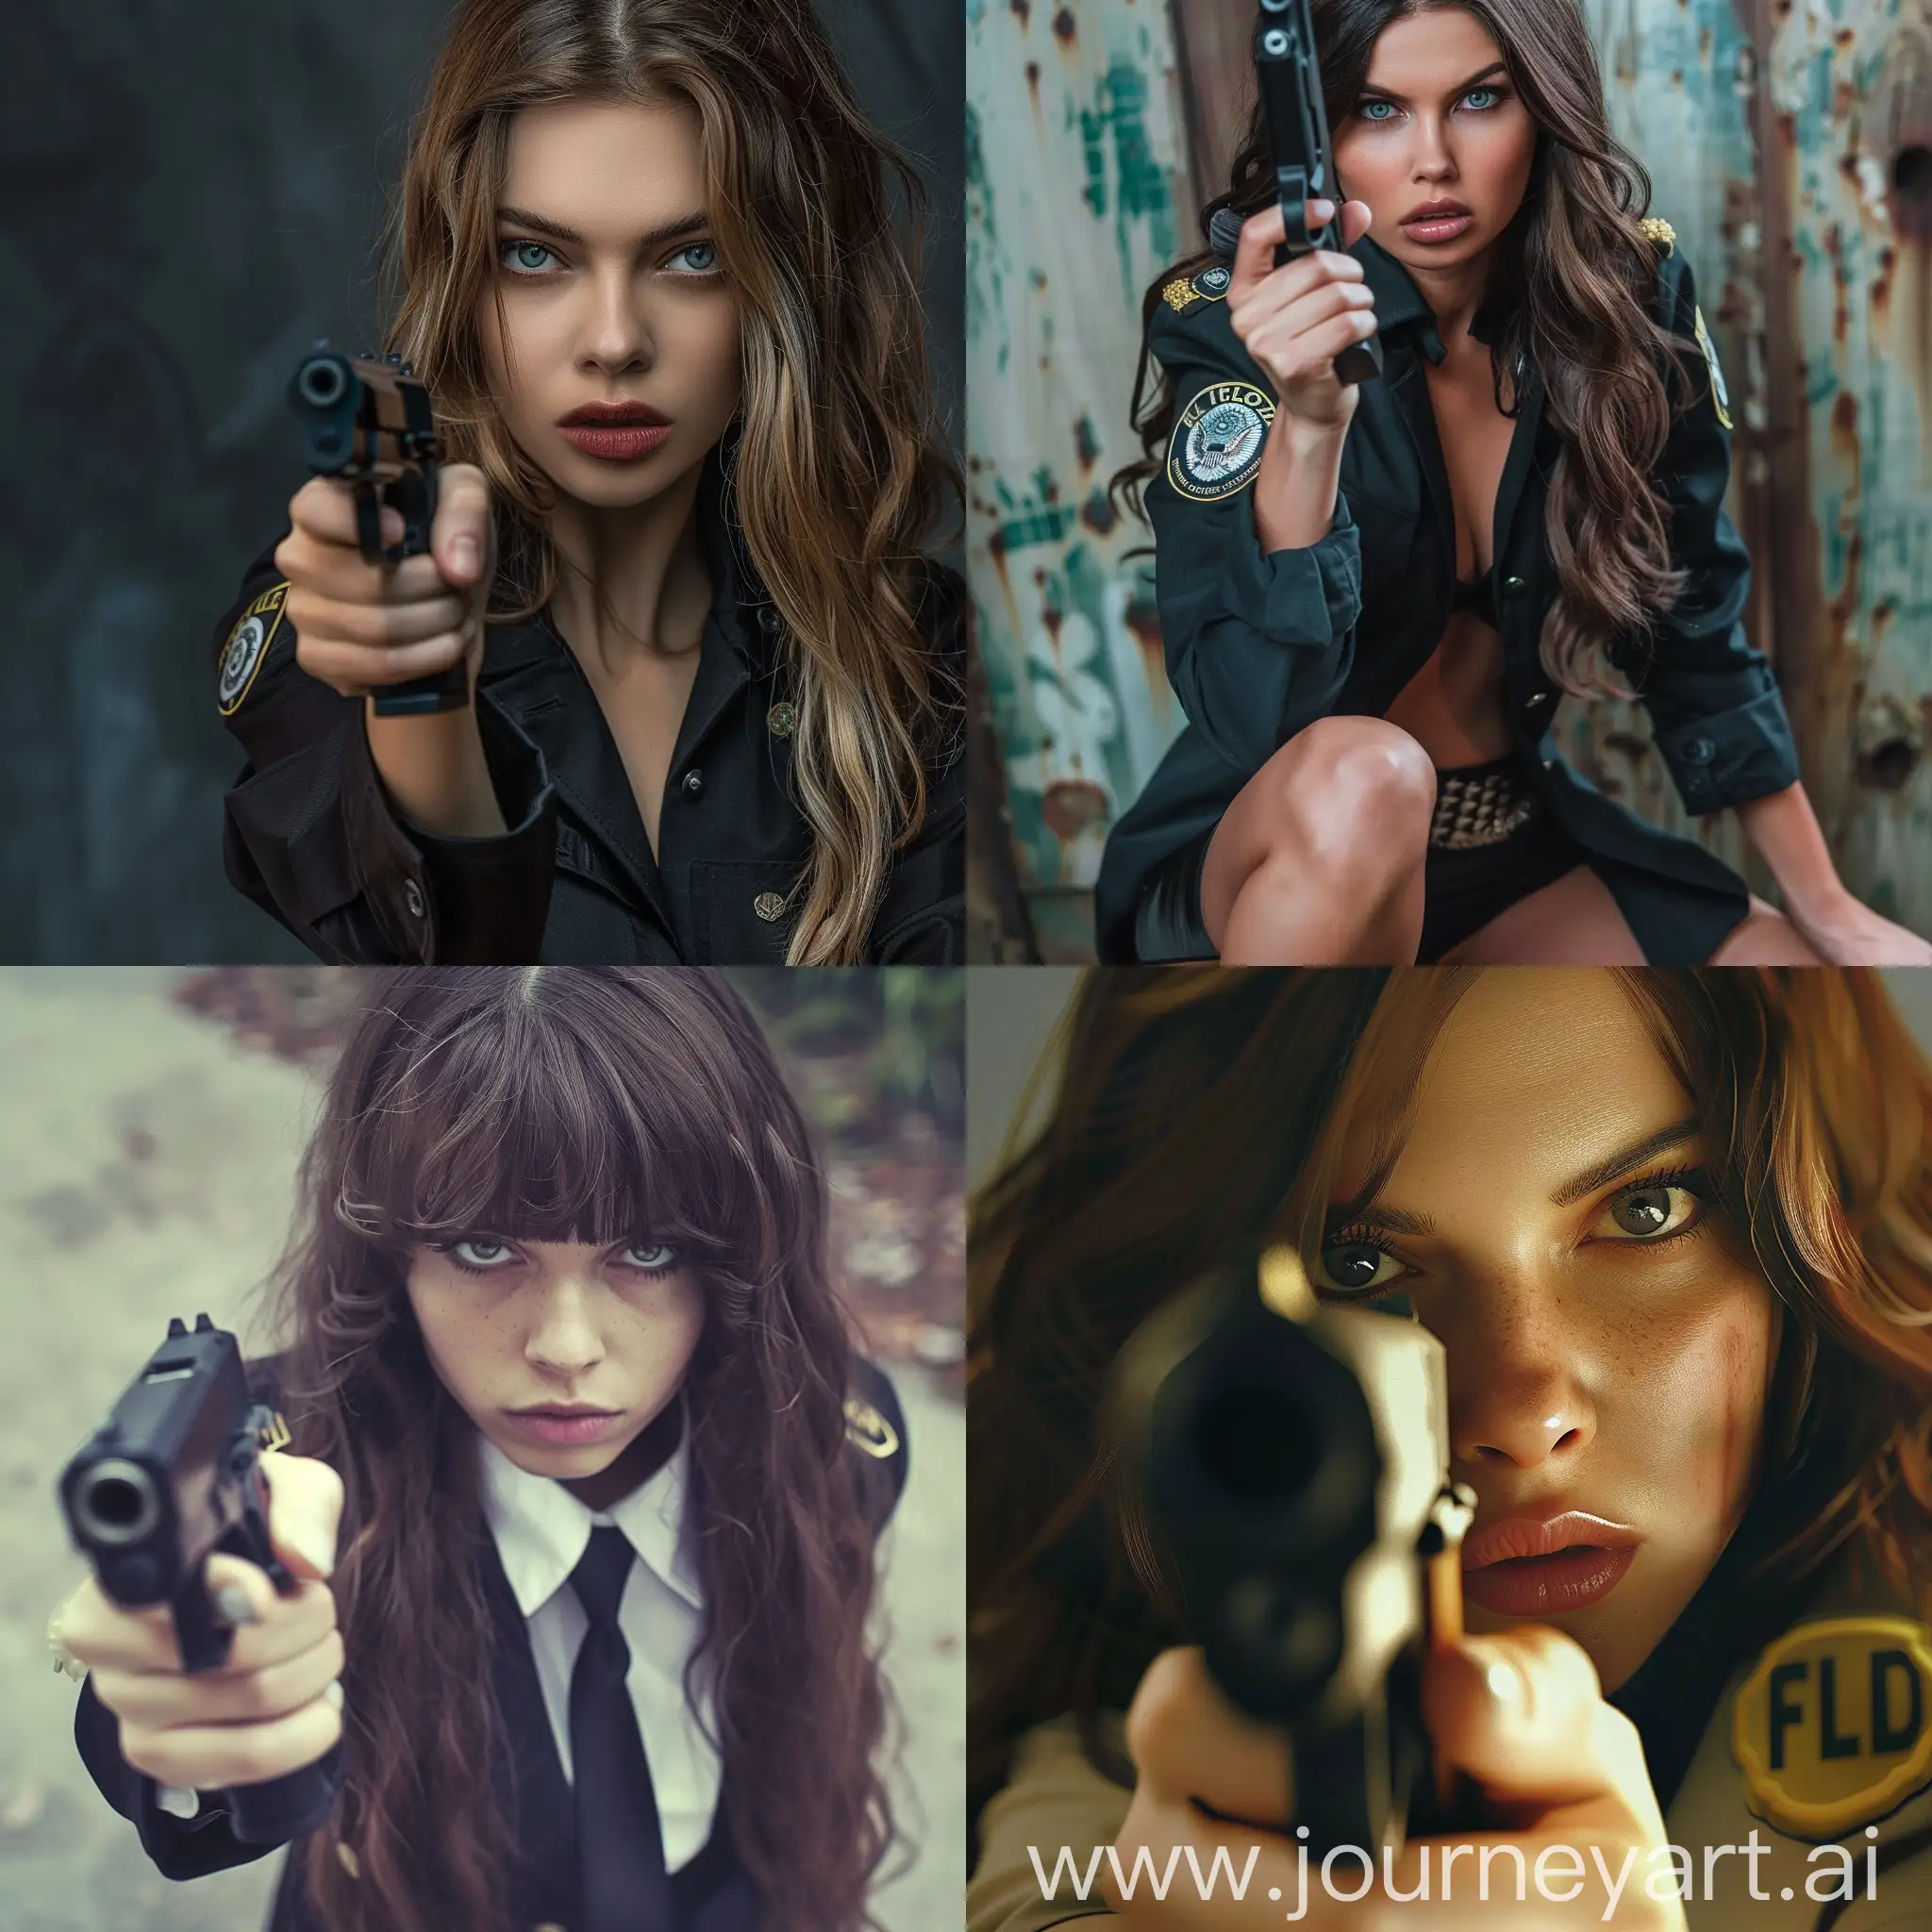 Confident-FBI-Agent-Woman-with-Gun-in-Urban-Setting